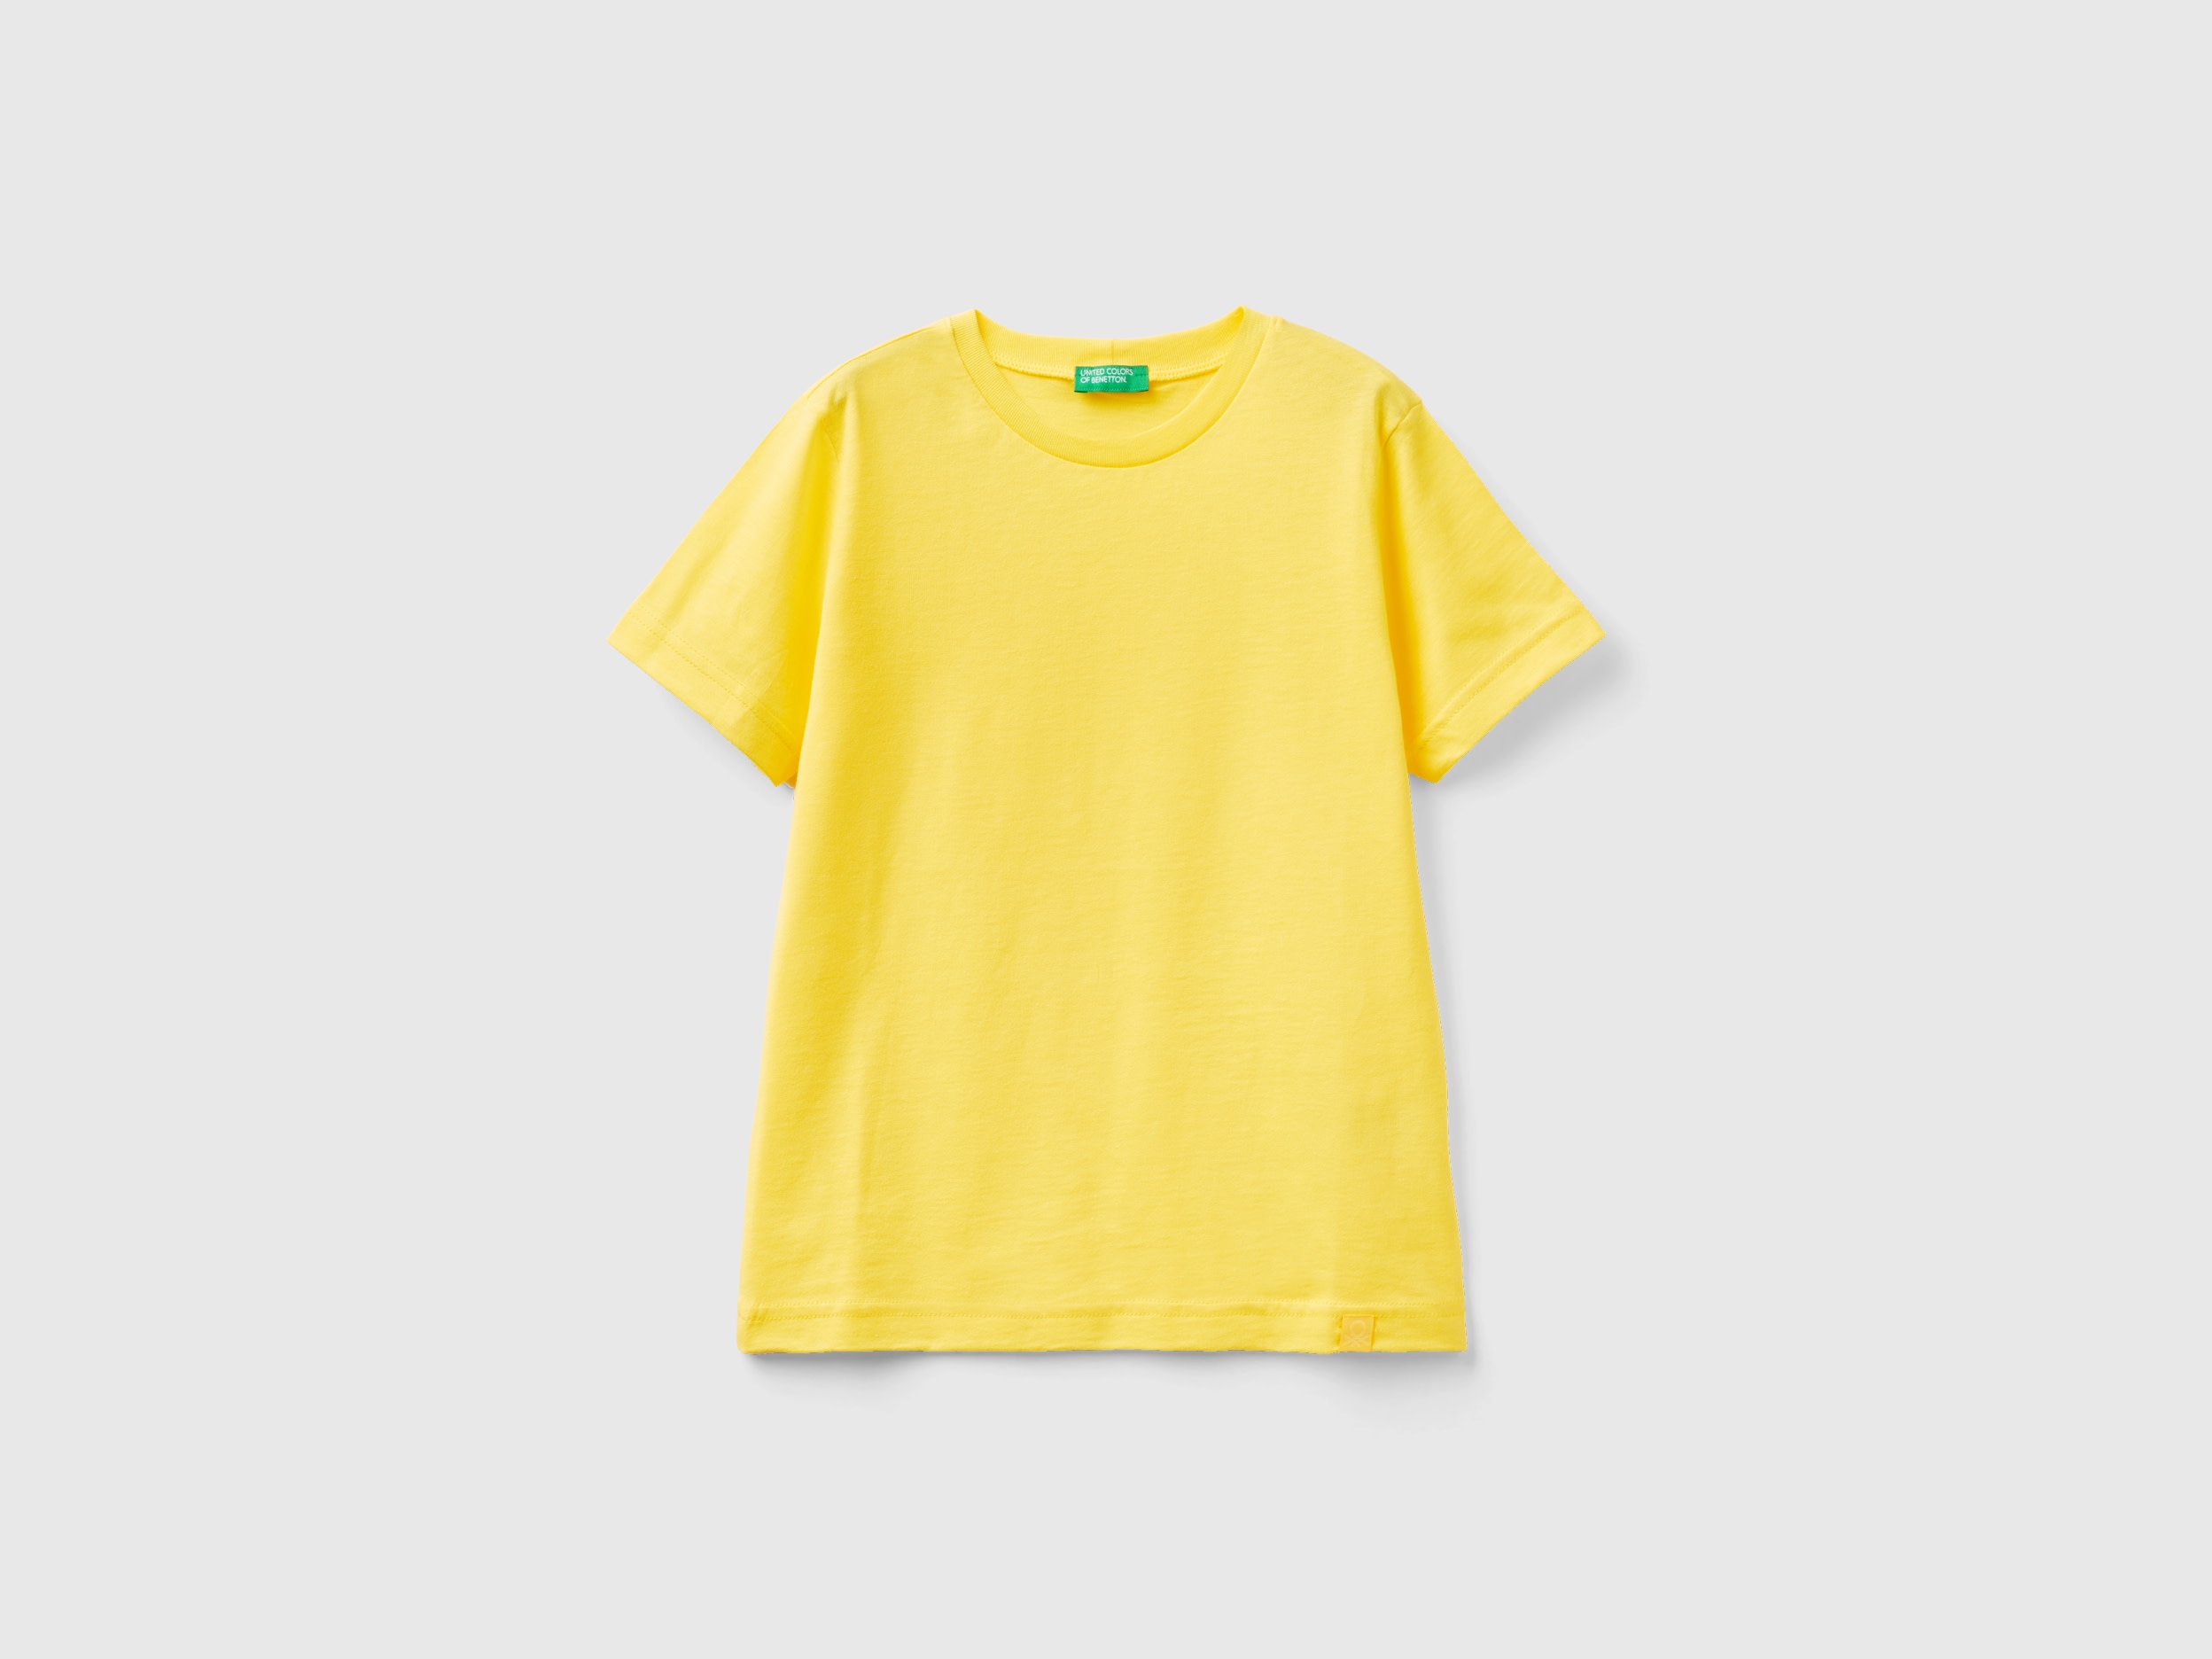 Benetton, Organic Cotton T-shirt, size 2XL, Yellow, Kids